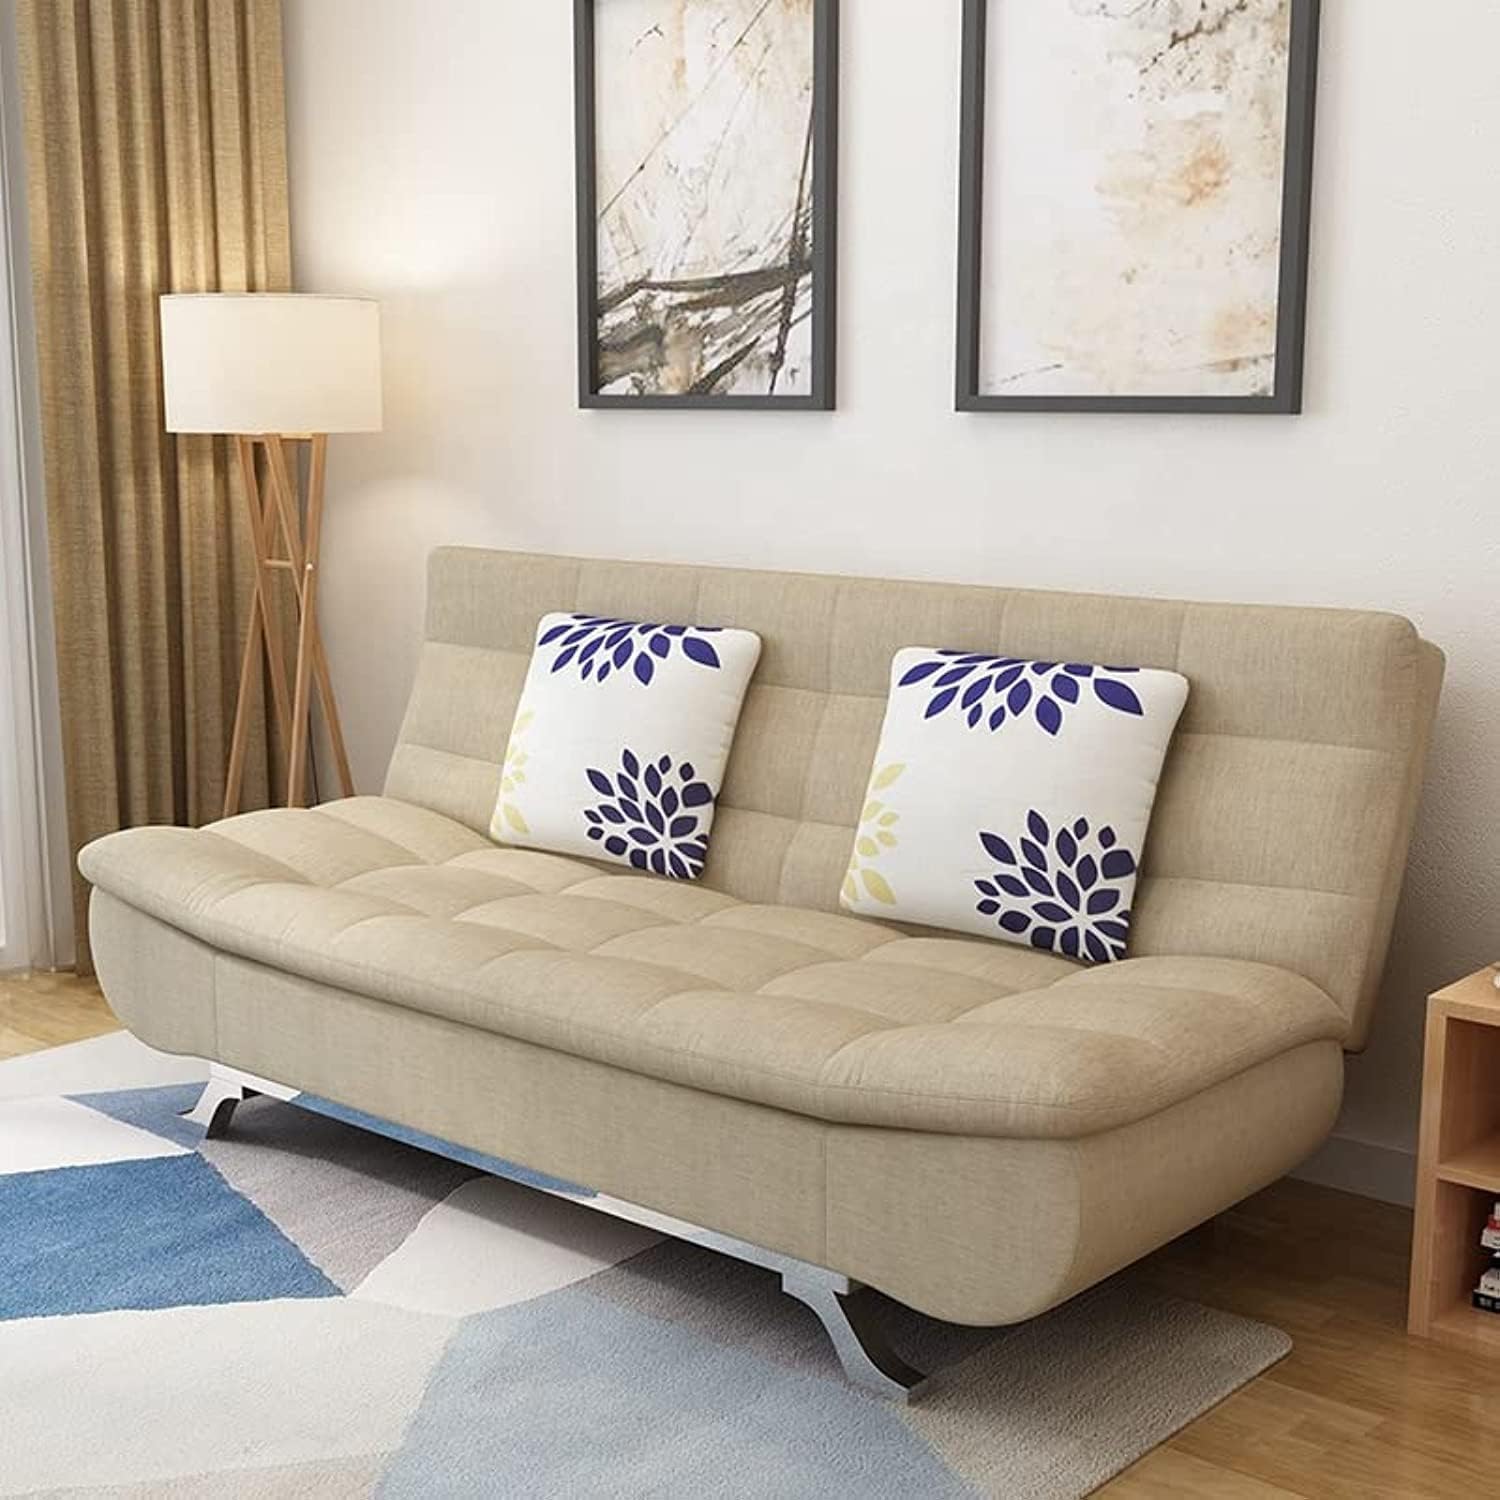 Generic Fabric Multifunction Folding Foam Sofa Bed Set Living Room (Beige)